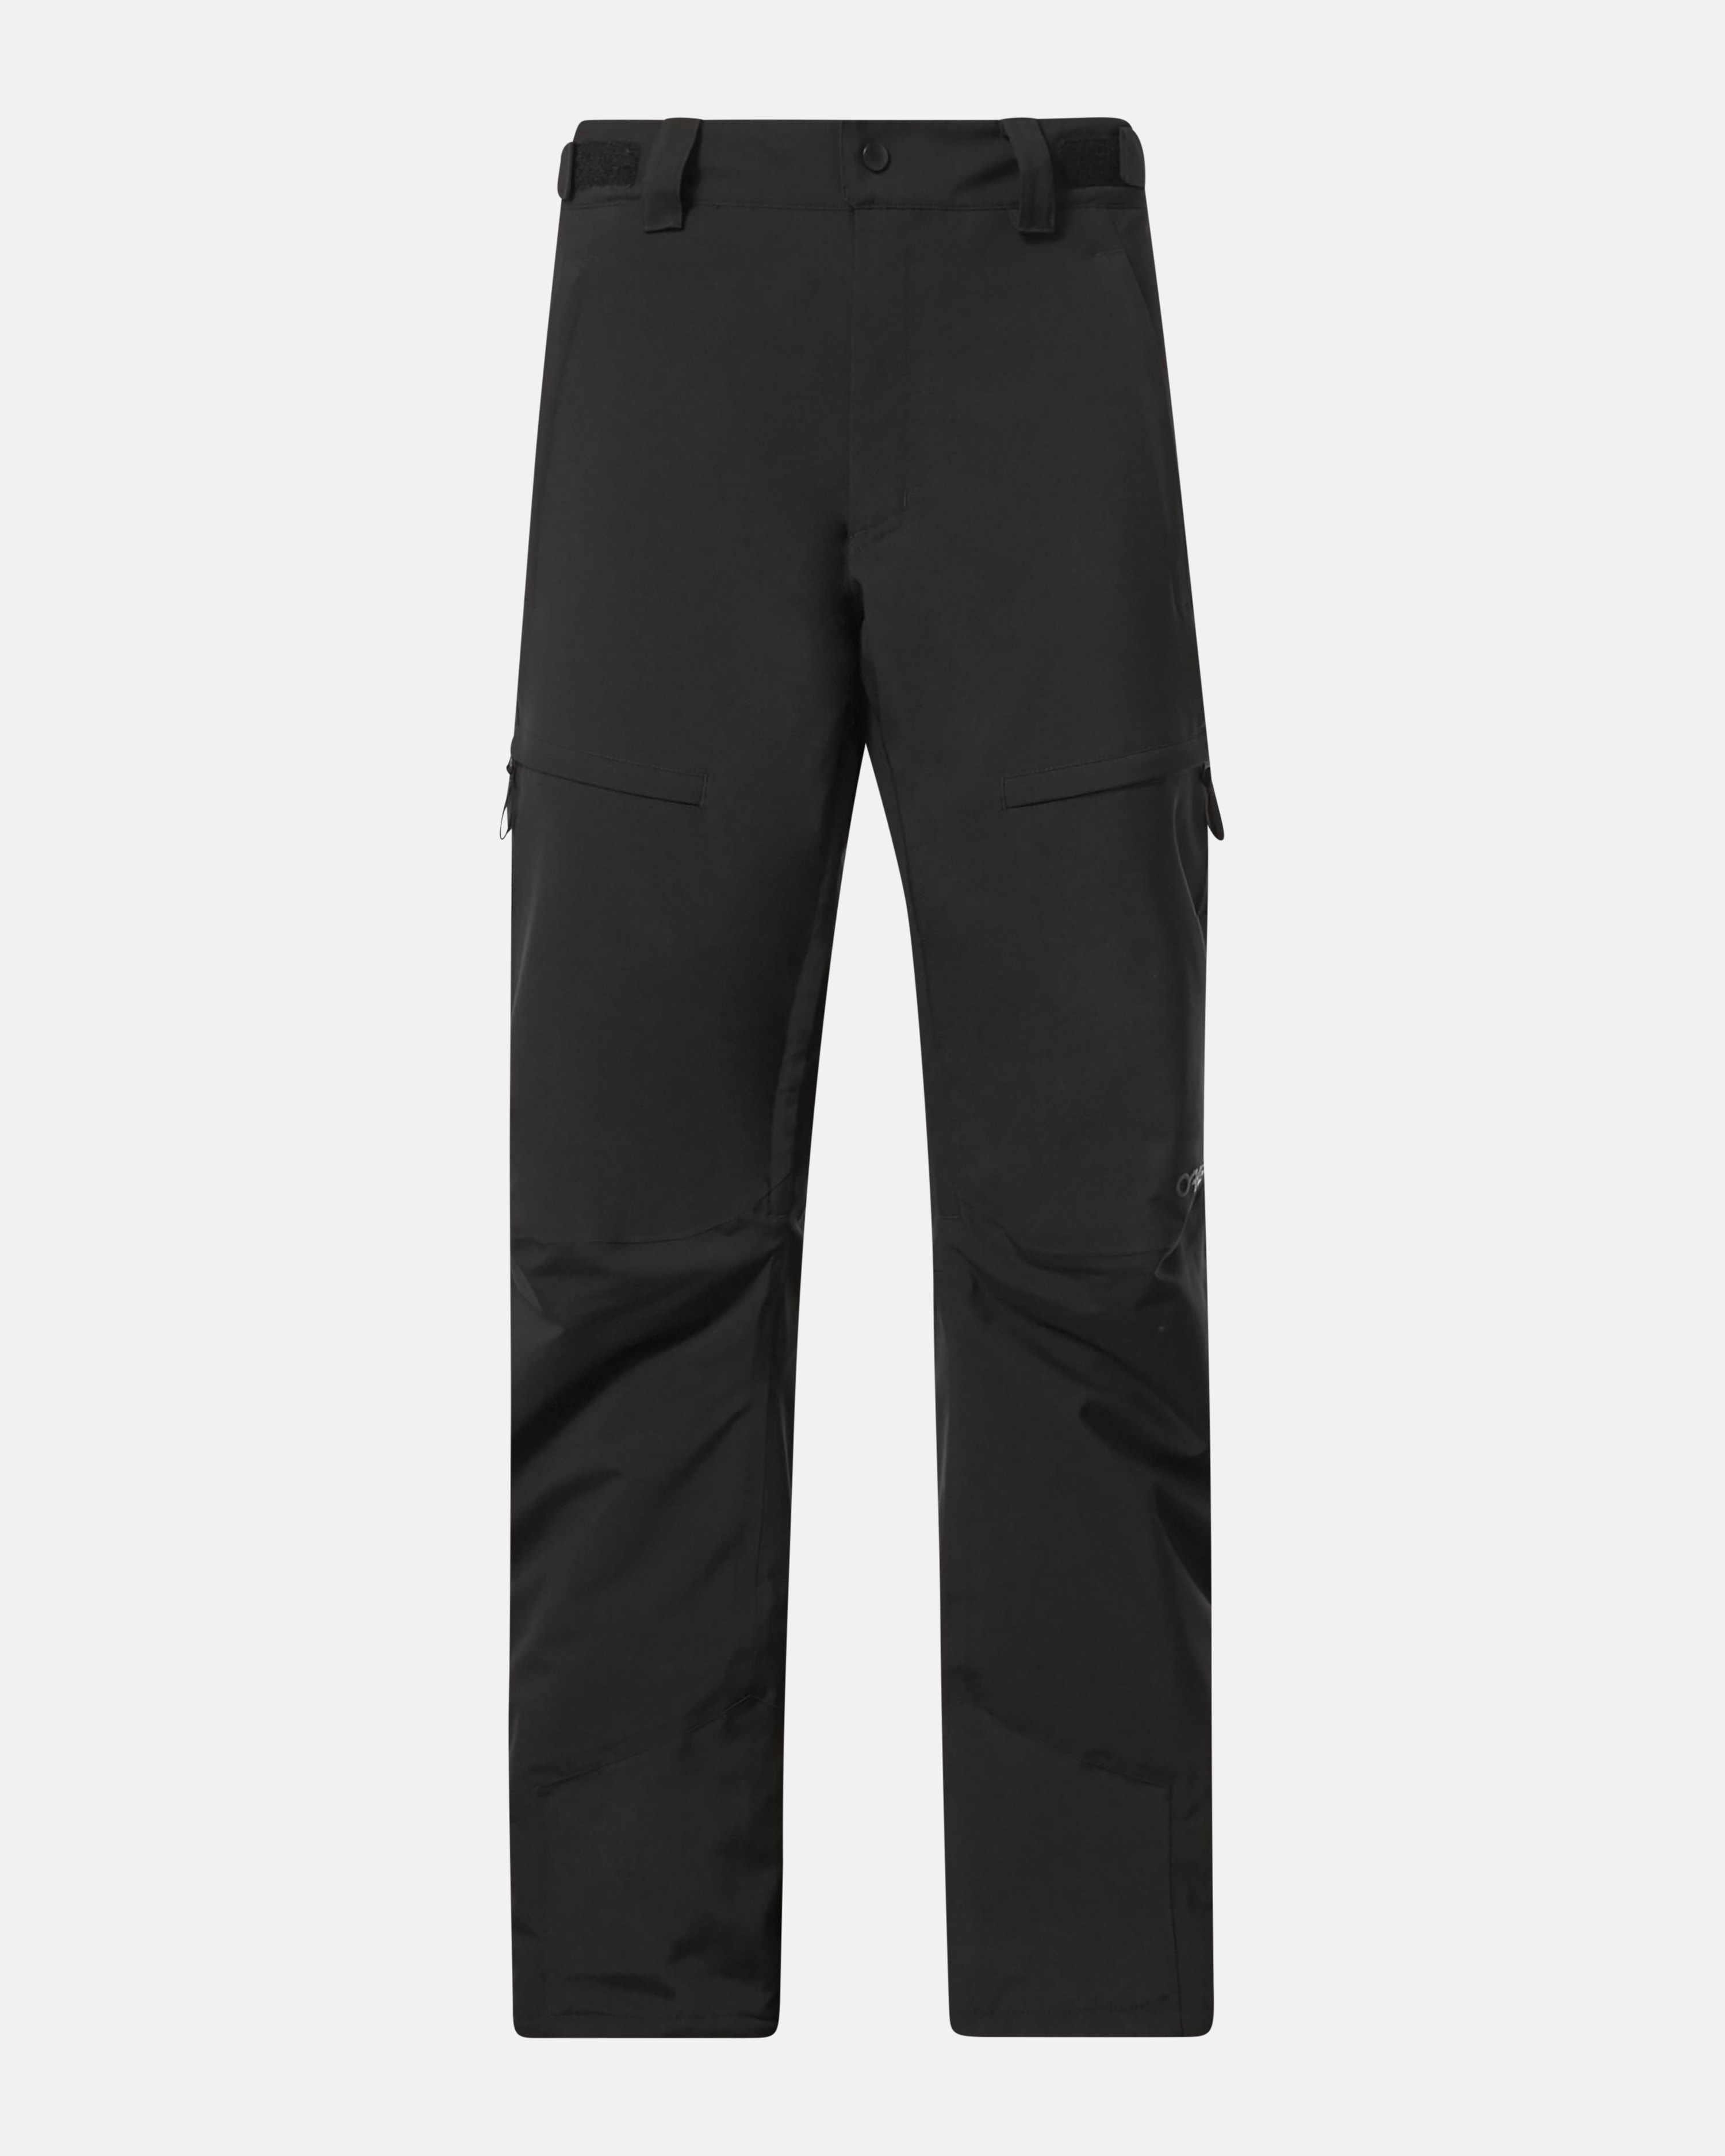 Oakley Snowboard Pant - Axis Insulated Black | Men | Junkyard